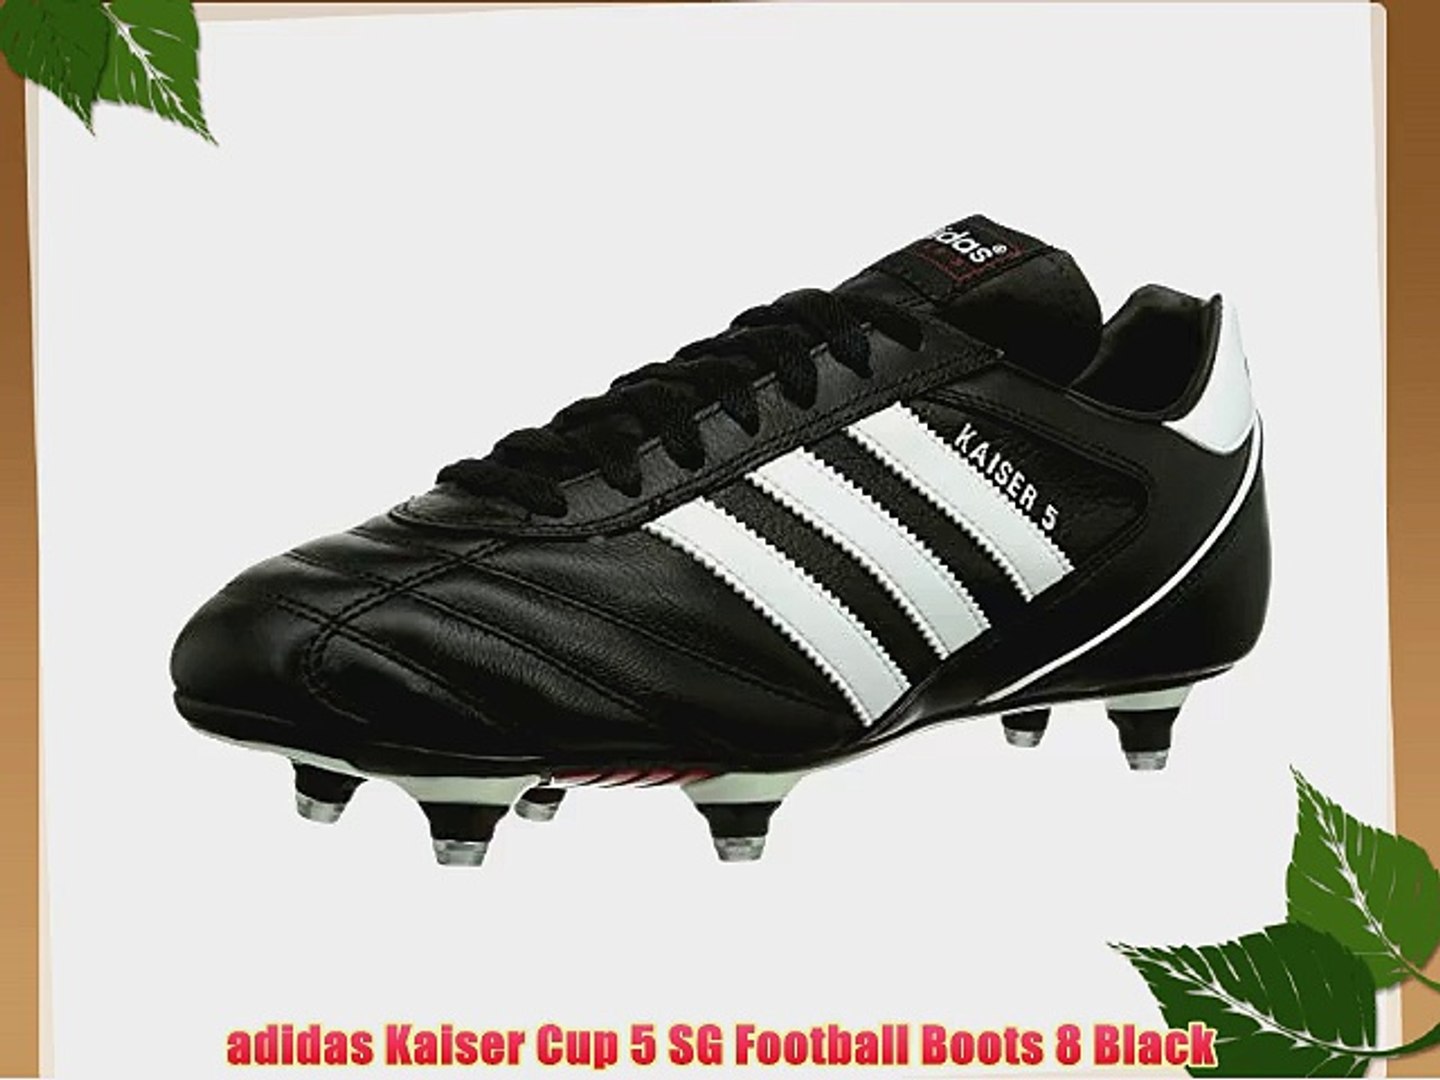 adidas Kaiser Cup 5 SG Football Boots 8 Black - video dailymotion